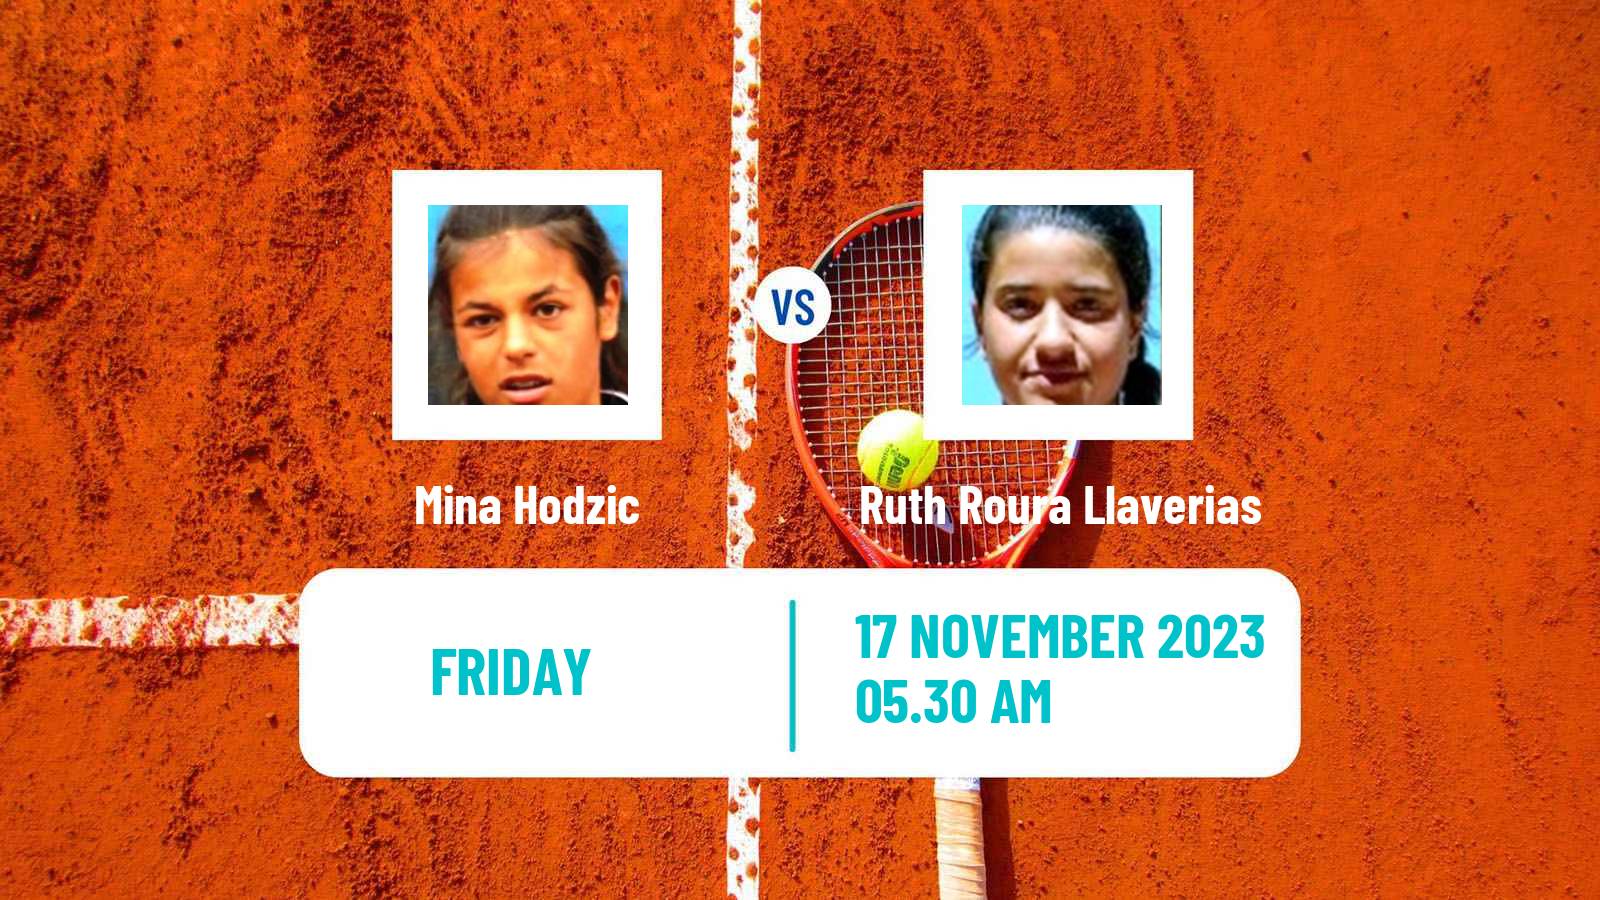 Tennis ITF W15 Nules Women Mina Hodzic - Ruth Roura Llaverias